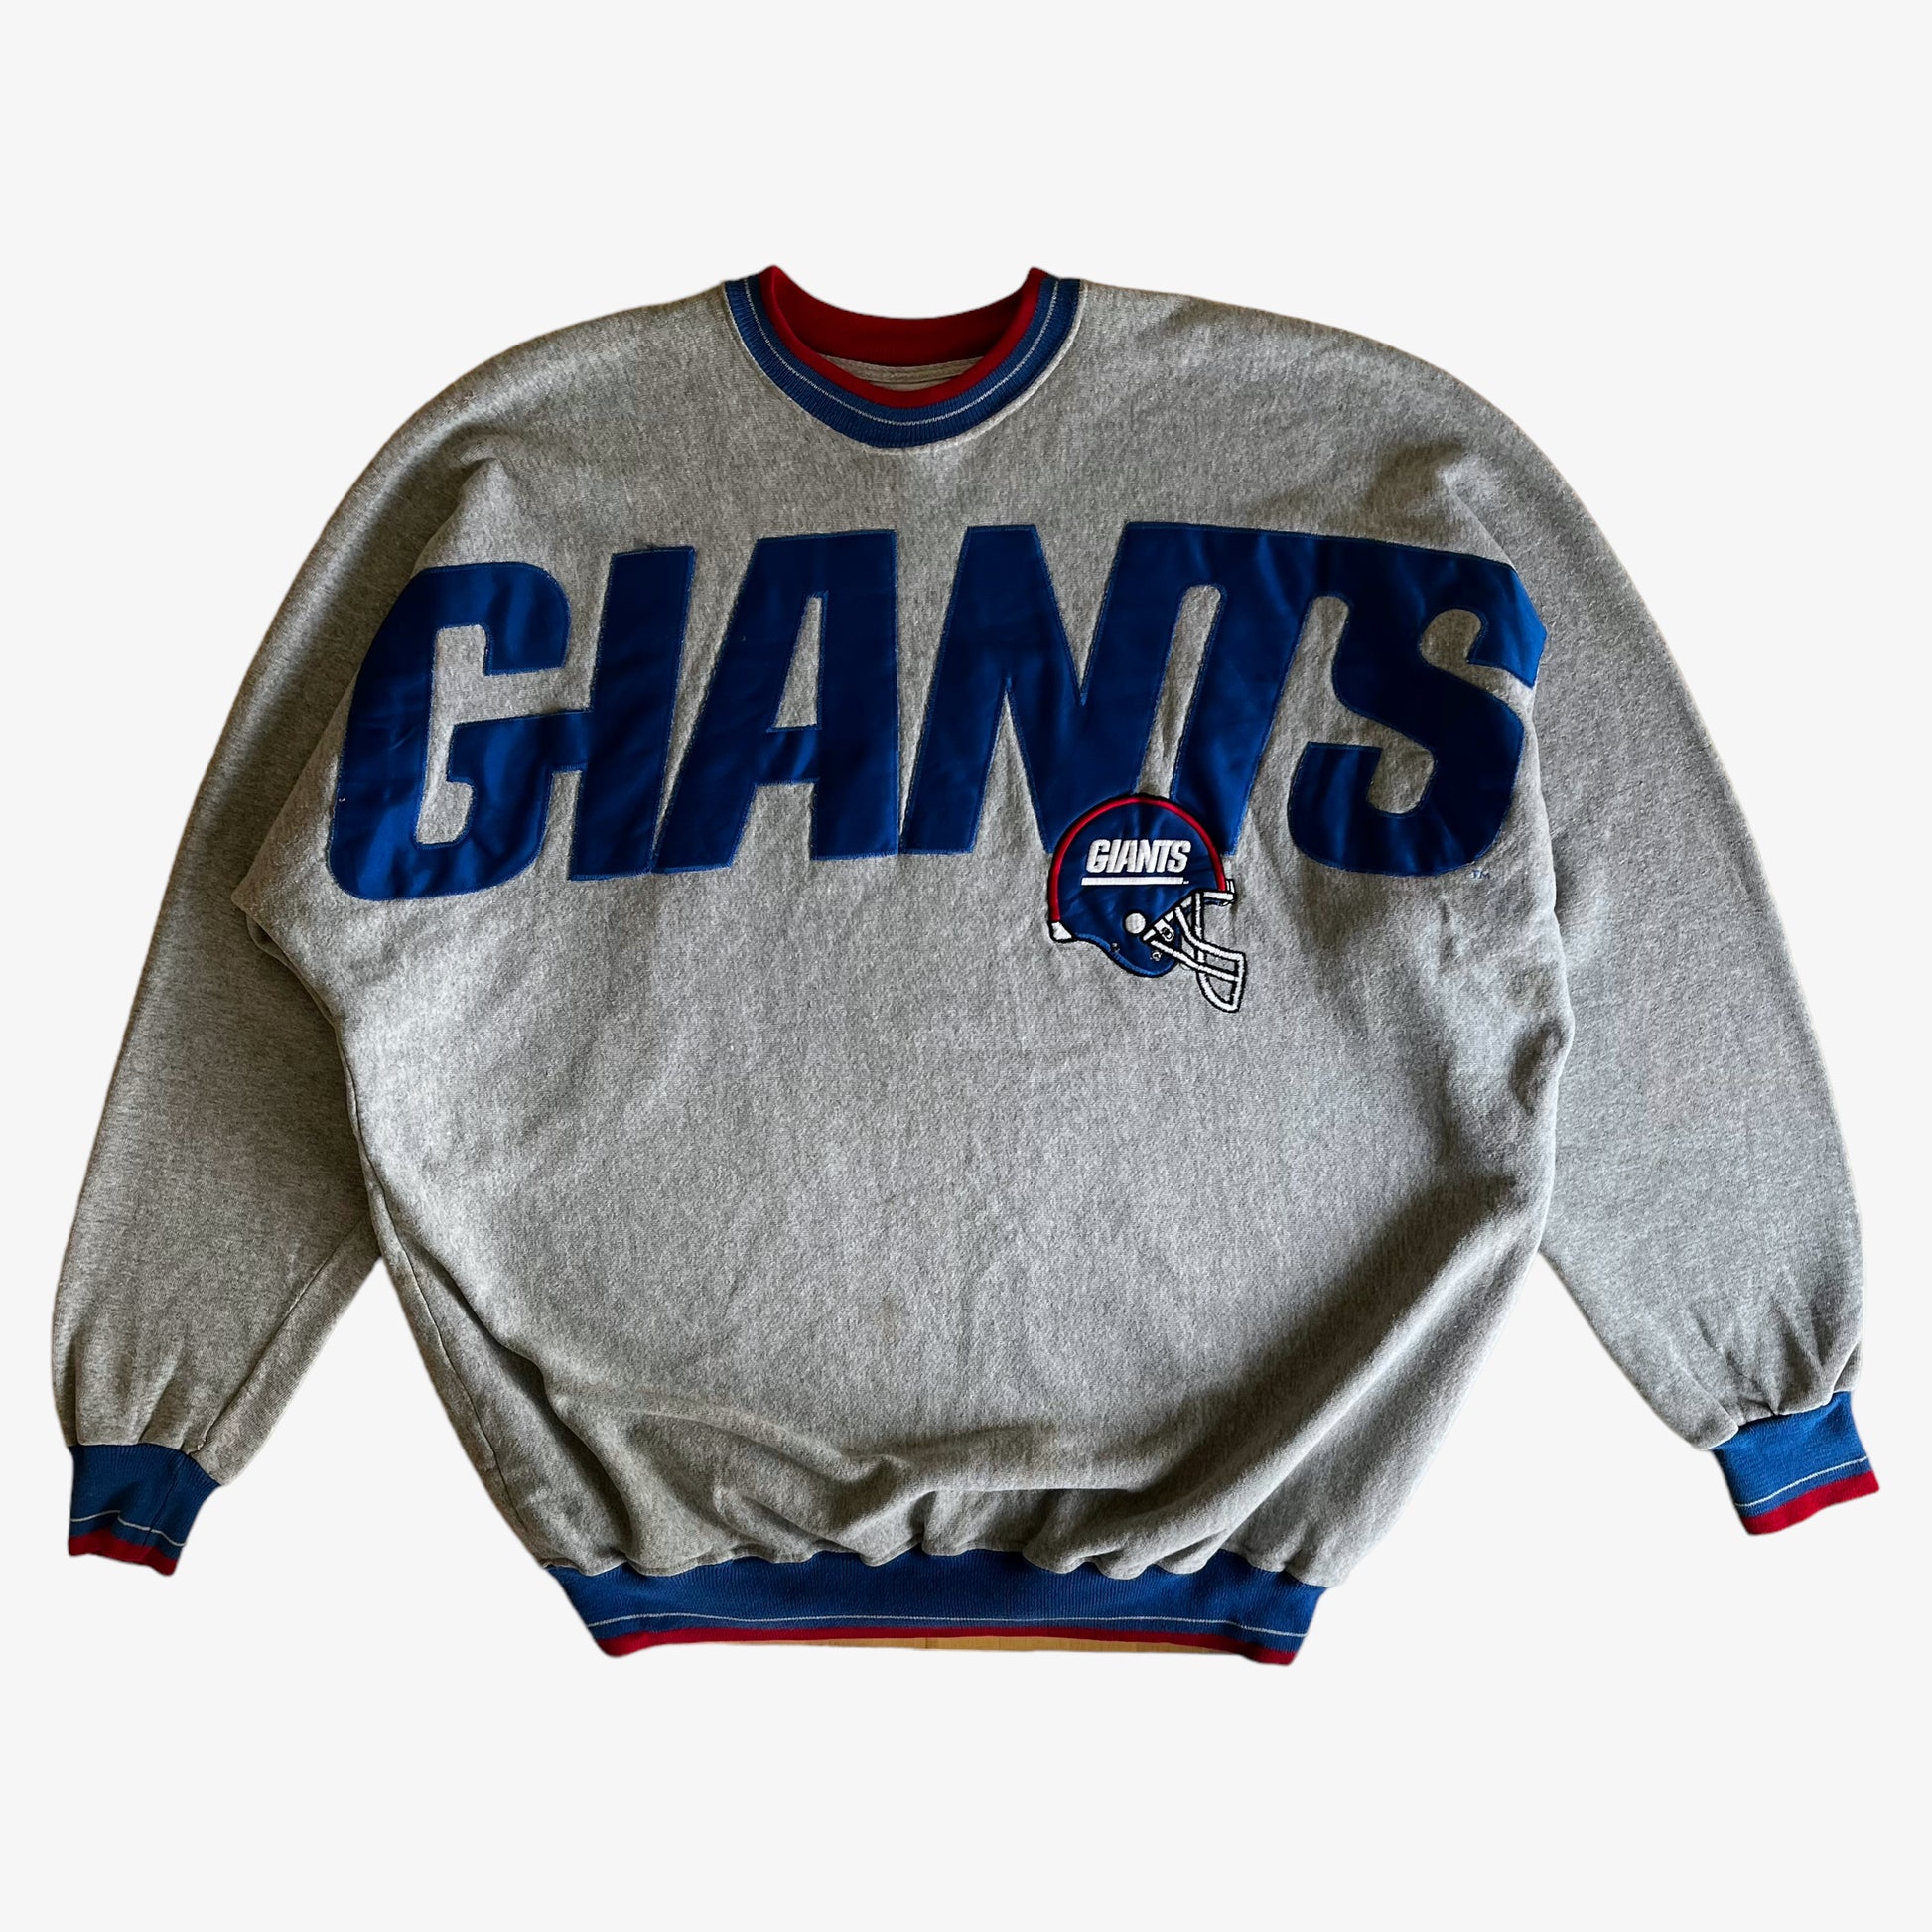 Vintage 90s NFL New York Giants Crewneck Sweatshirt - Casspios Dream